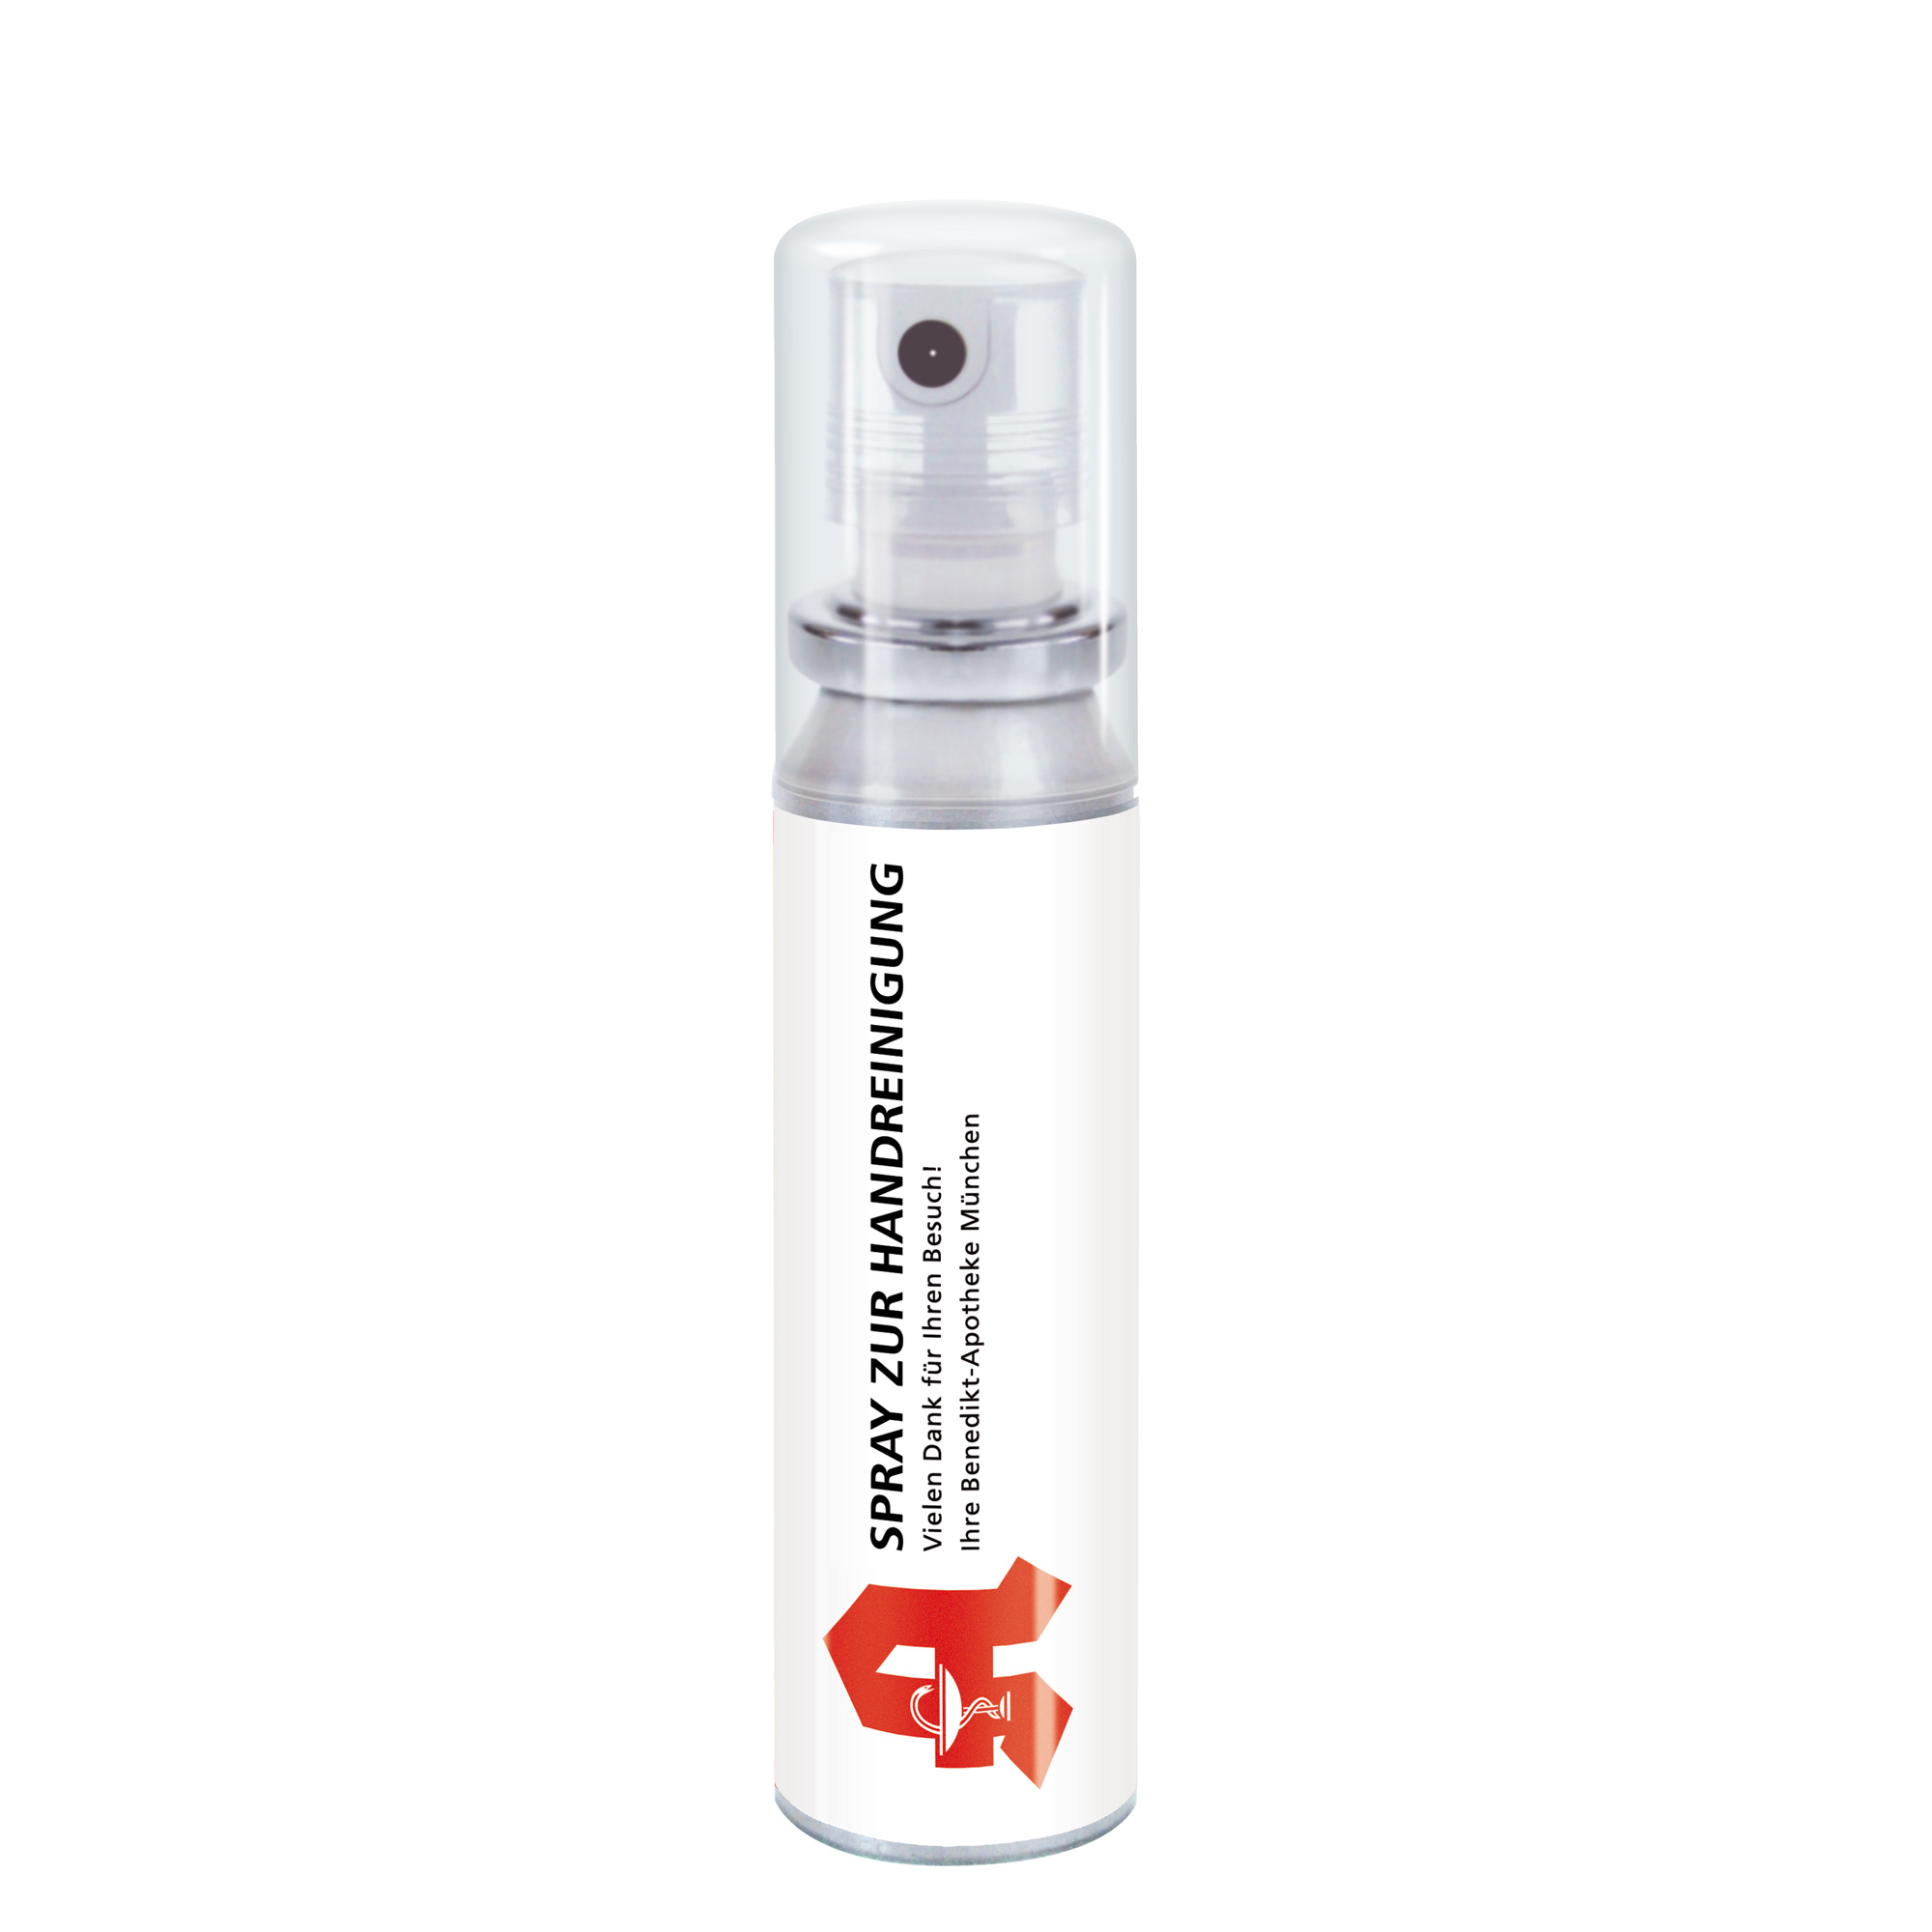 20 ml Pocket Spray - Handreinigungsspray antibakteriell - Body Label